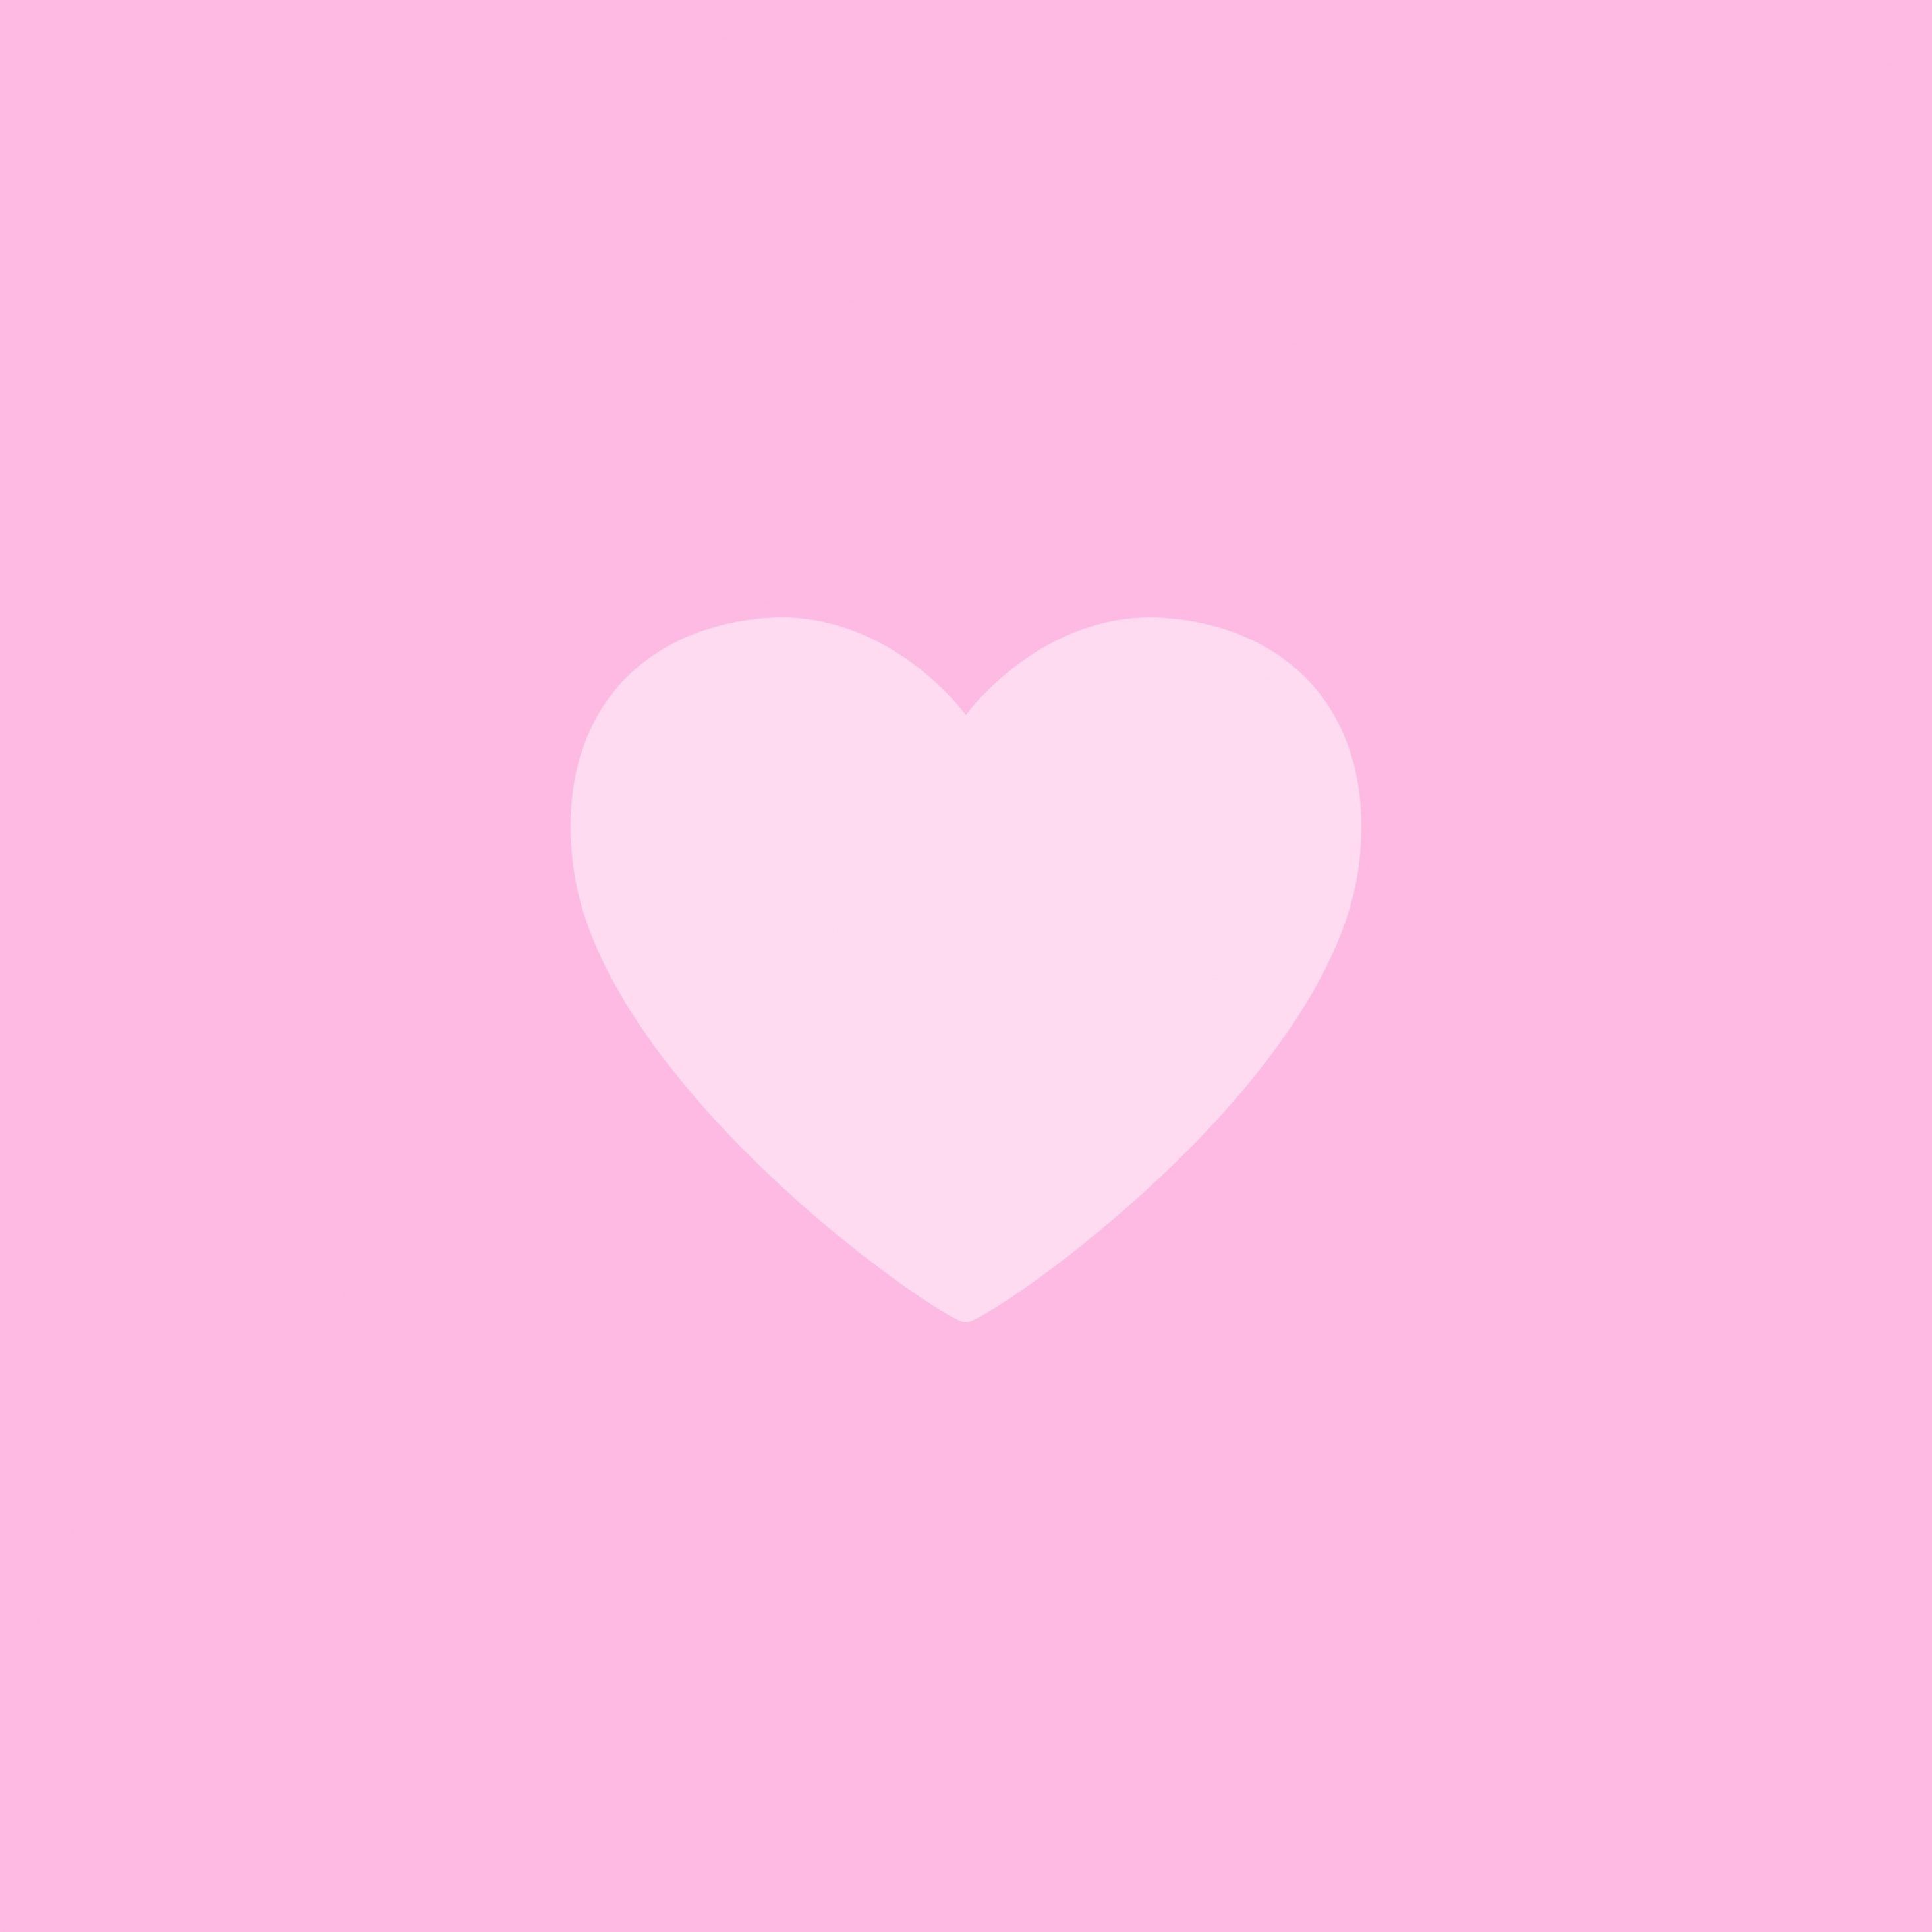 Apple Hintergrundbild 2932x2932. Love Heart Pink Background iPad Wallpaper iPad Wallpaper 4k iPad Wallpaper 5k free download iPad Pro, iPad Mini, iPad Air, iOS, iPadOS, Parallax, iPad retina Wallpaper